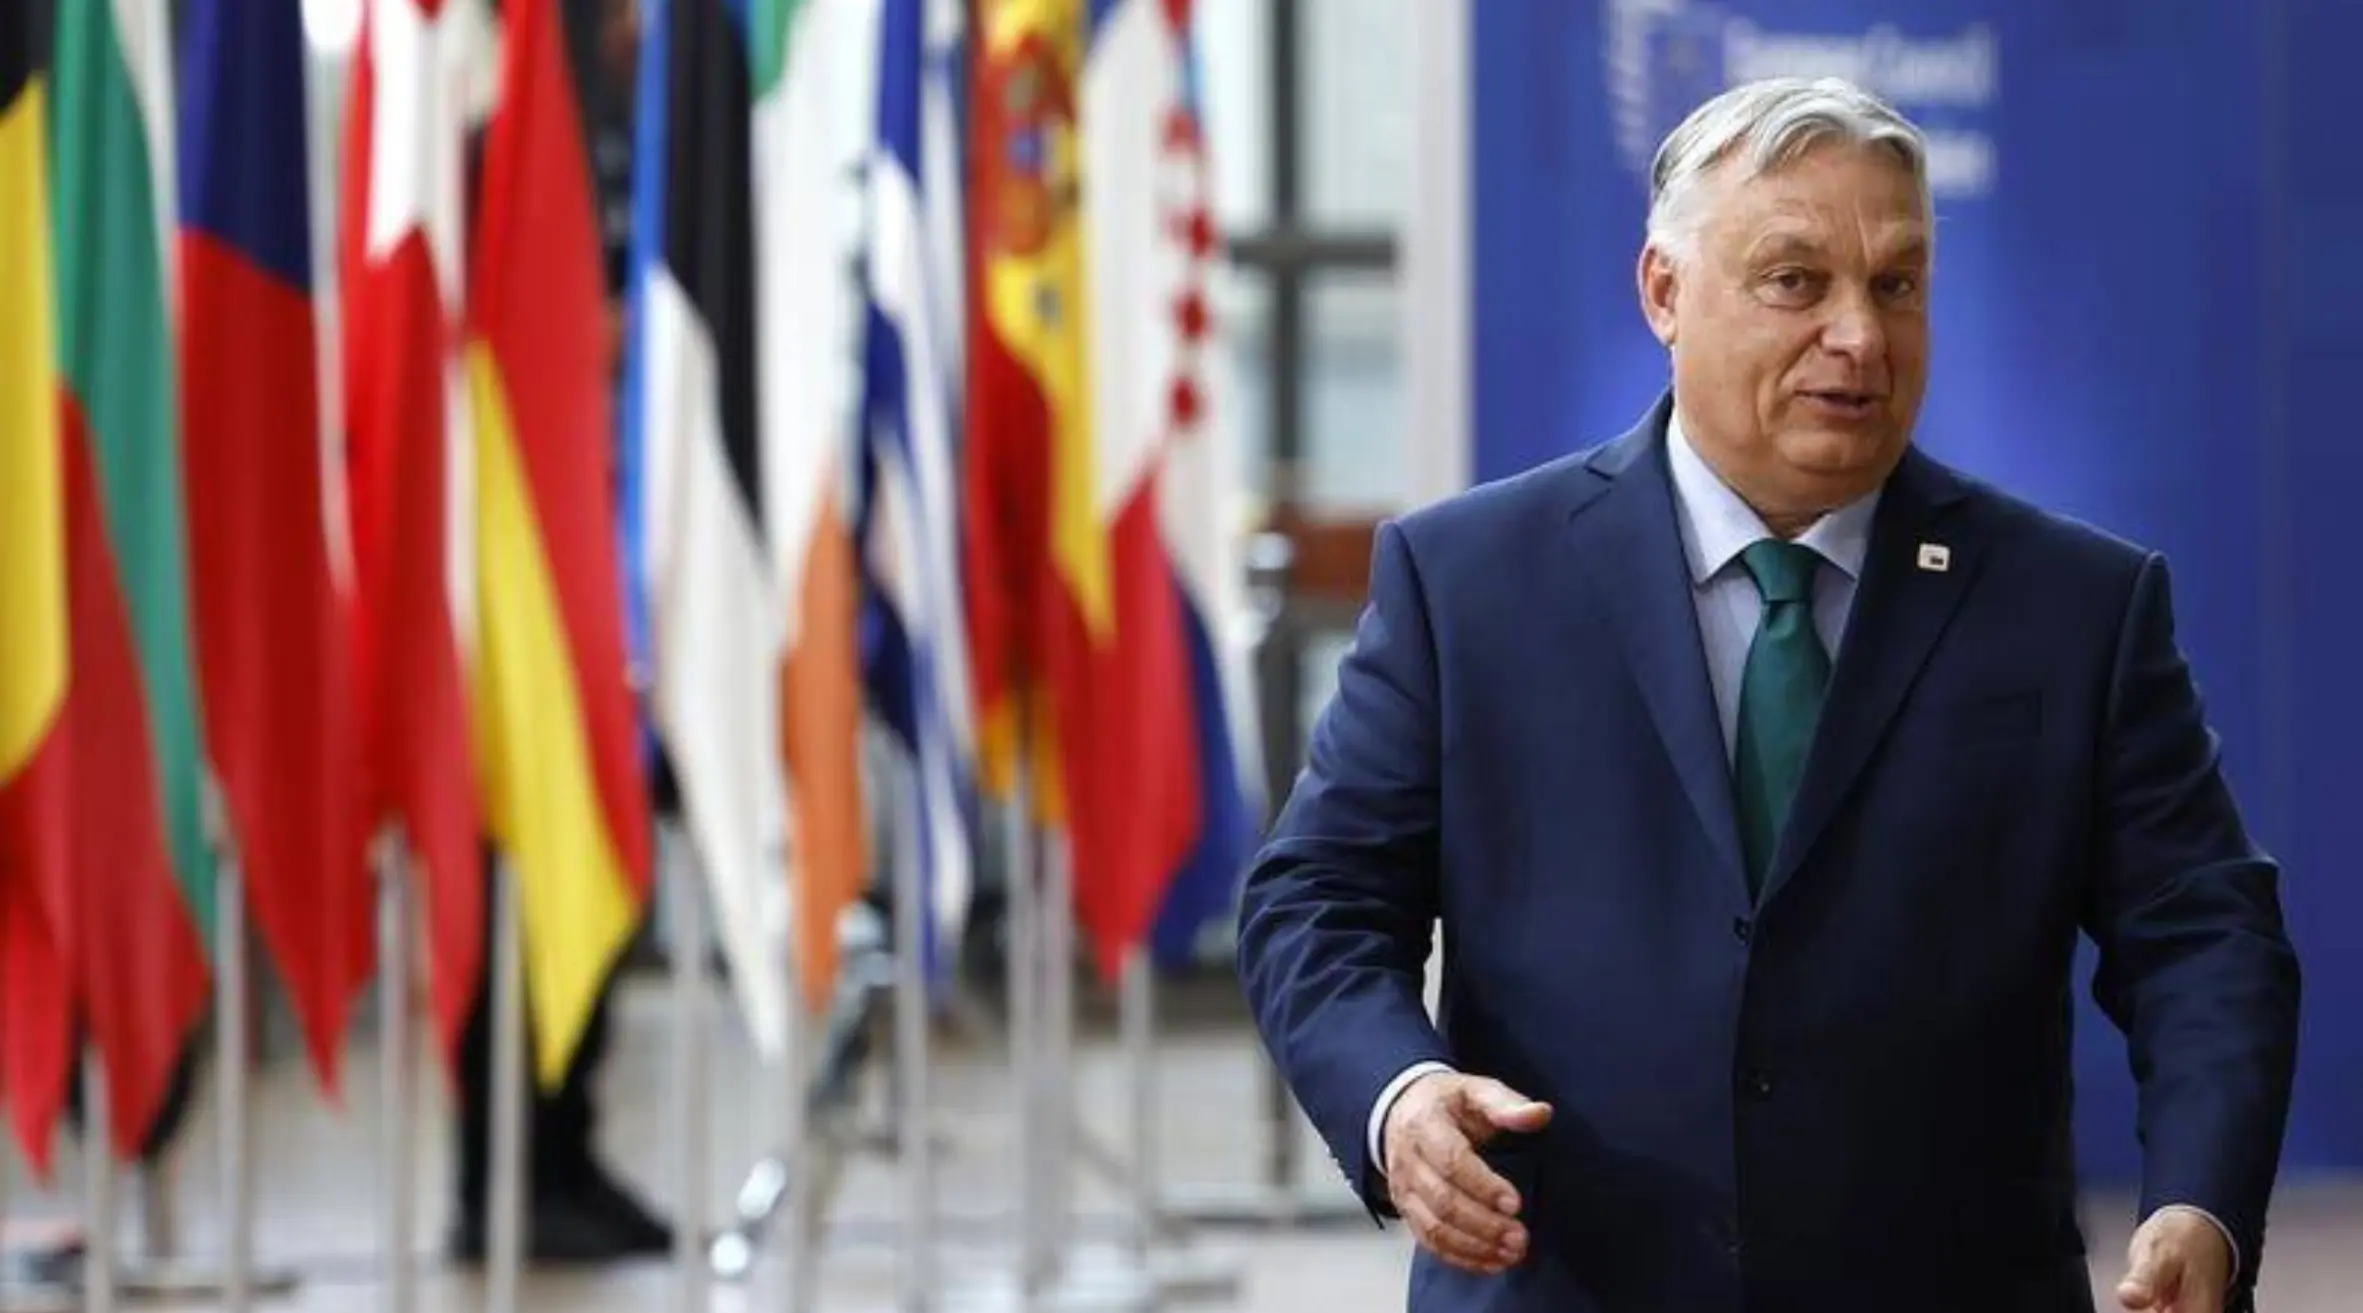 Viktor Orbán launches alliance to influence EU Parliament